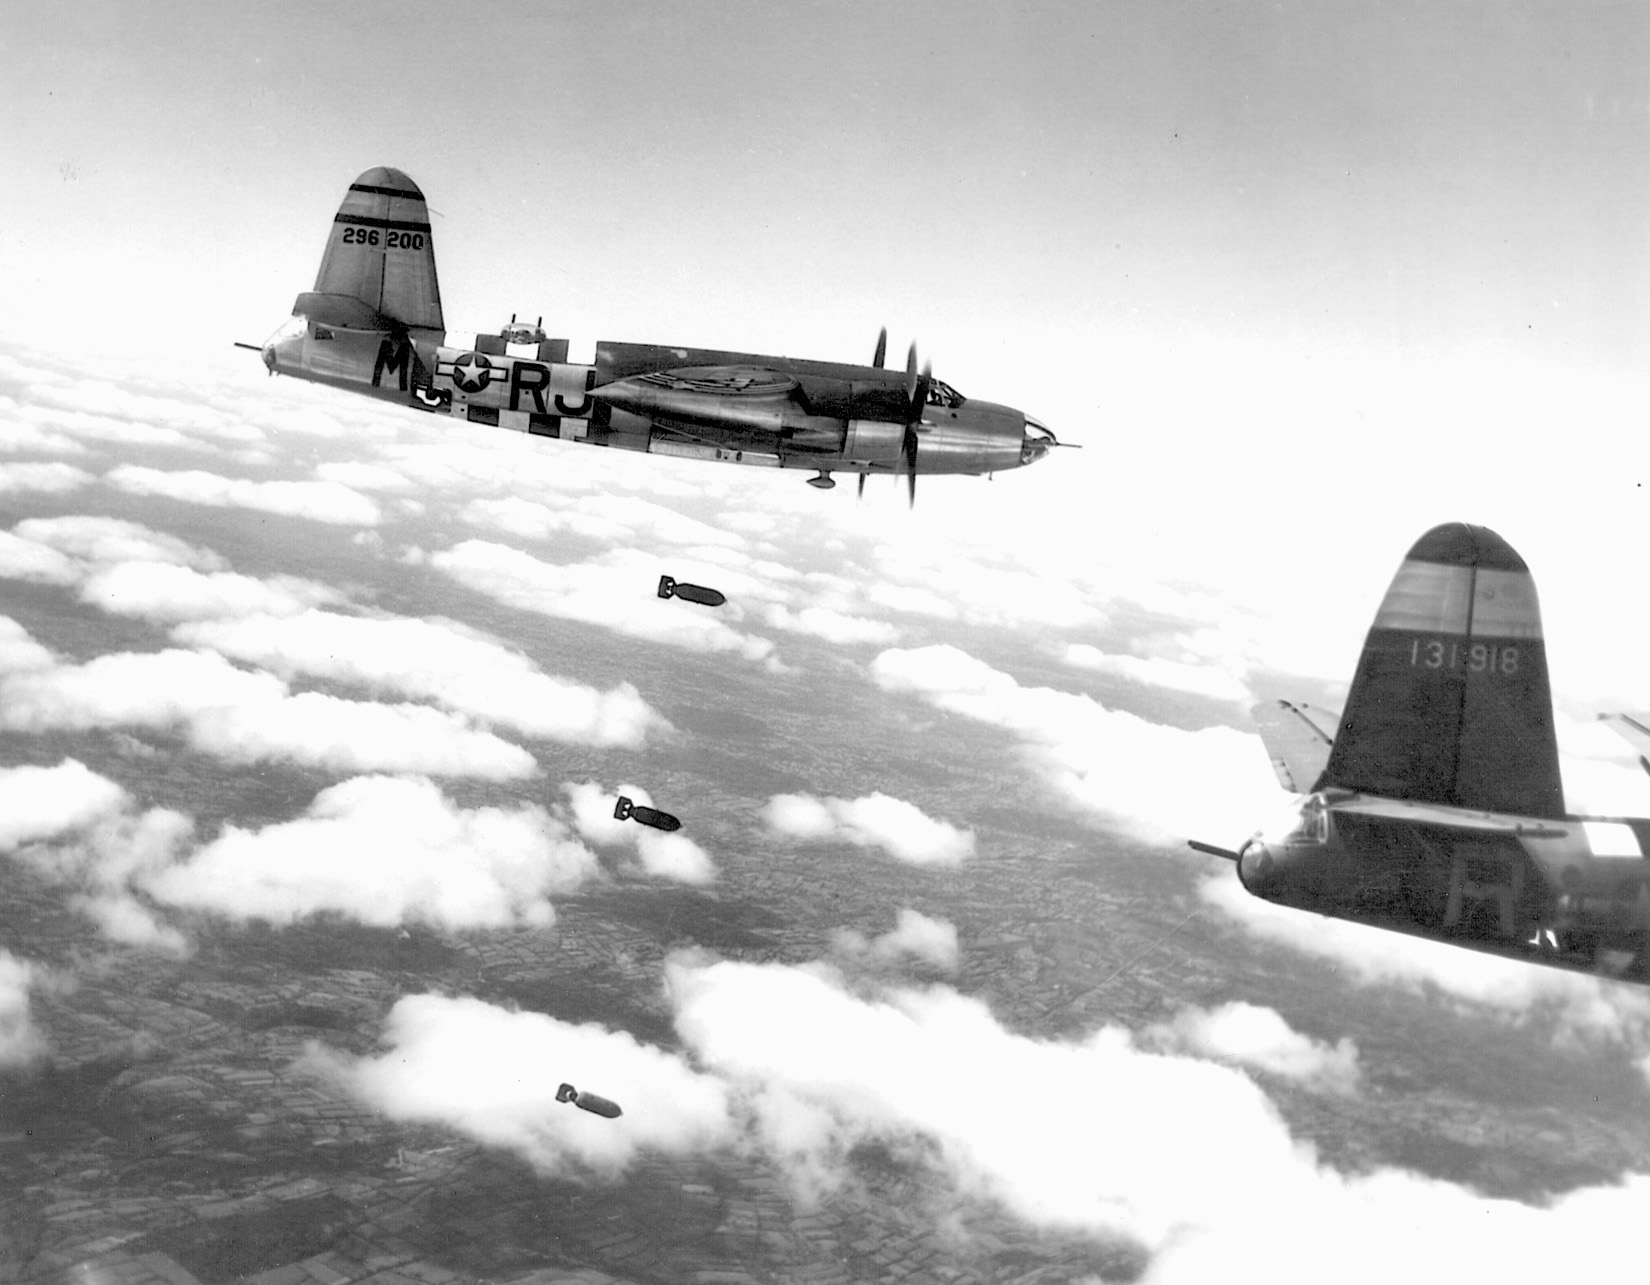   Flying above Torigni, France, a B-26 Silver Streak Marauder releases its bombload.